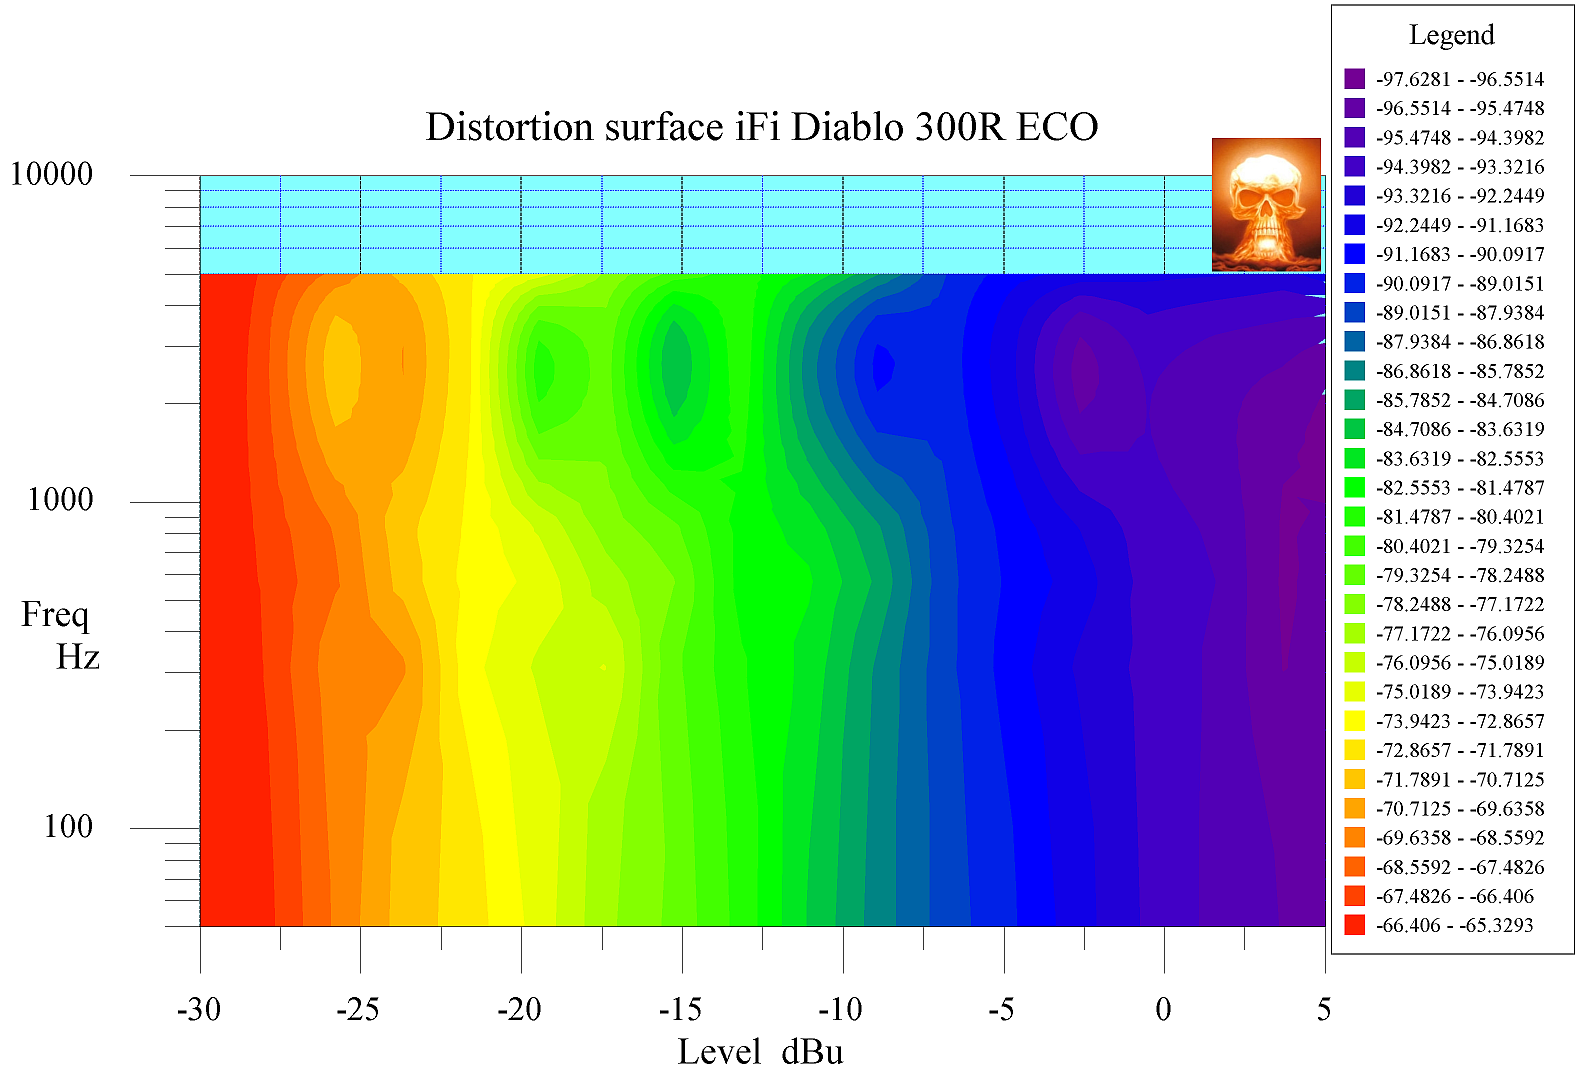 Distortion contour iFi Diablo 300R ECO 5 dBu max wm small.png